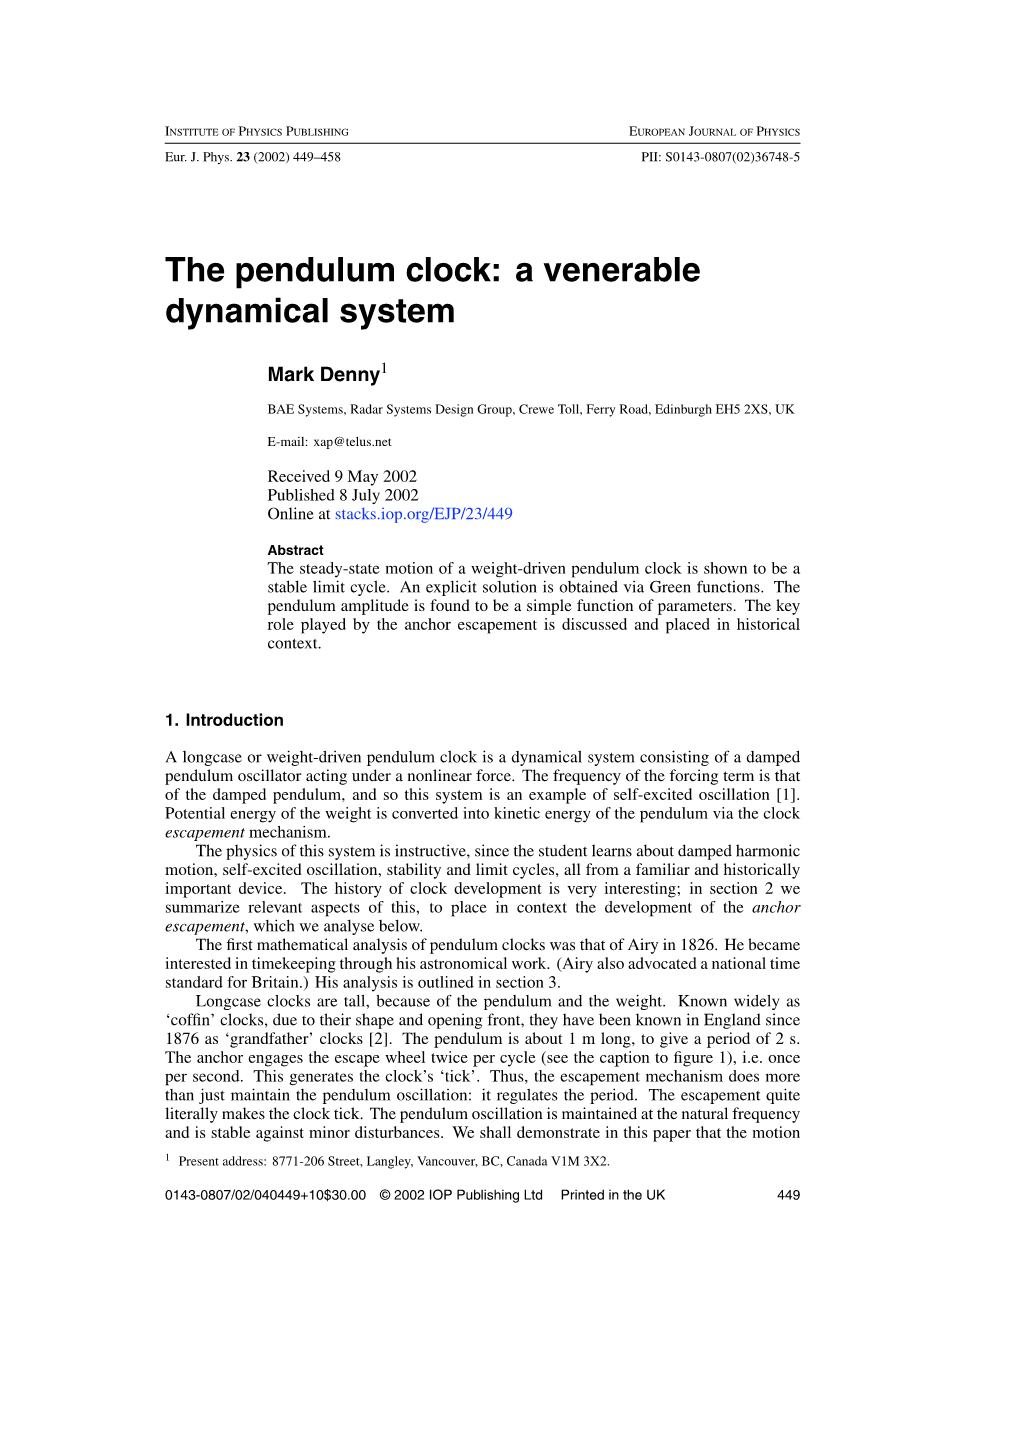 The Pendulum Clock: a Venerable Dynamical System